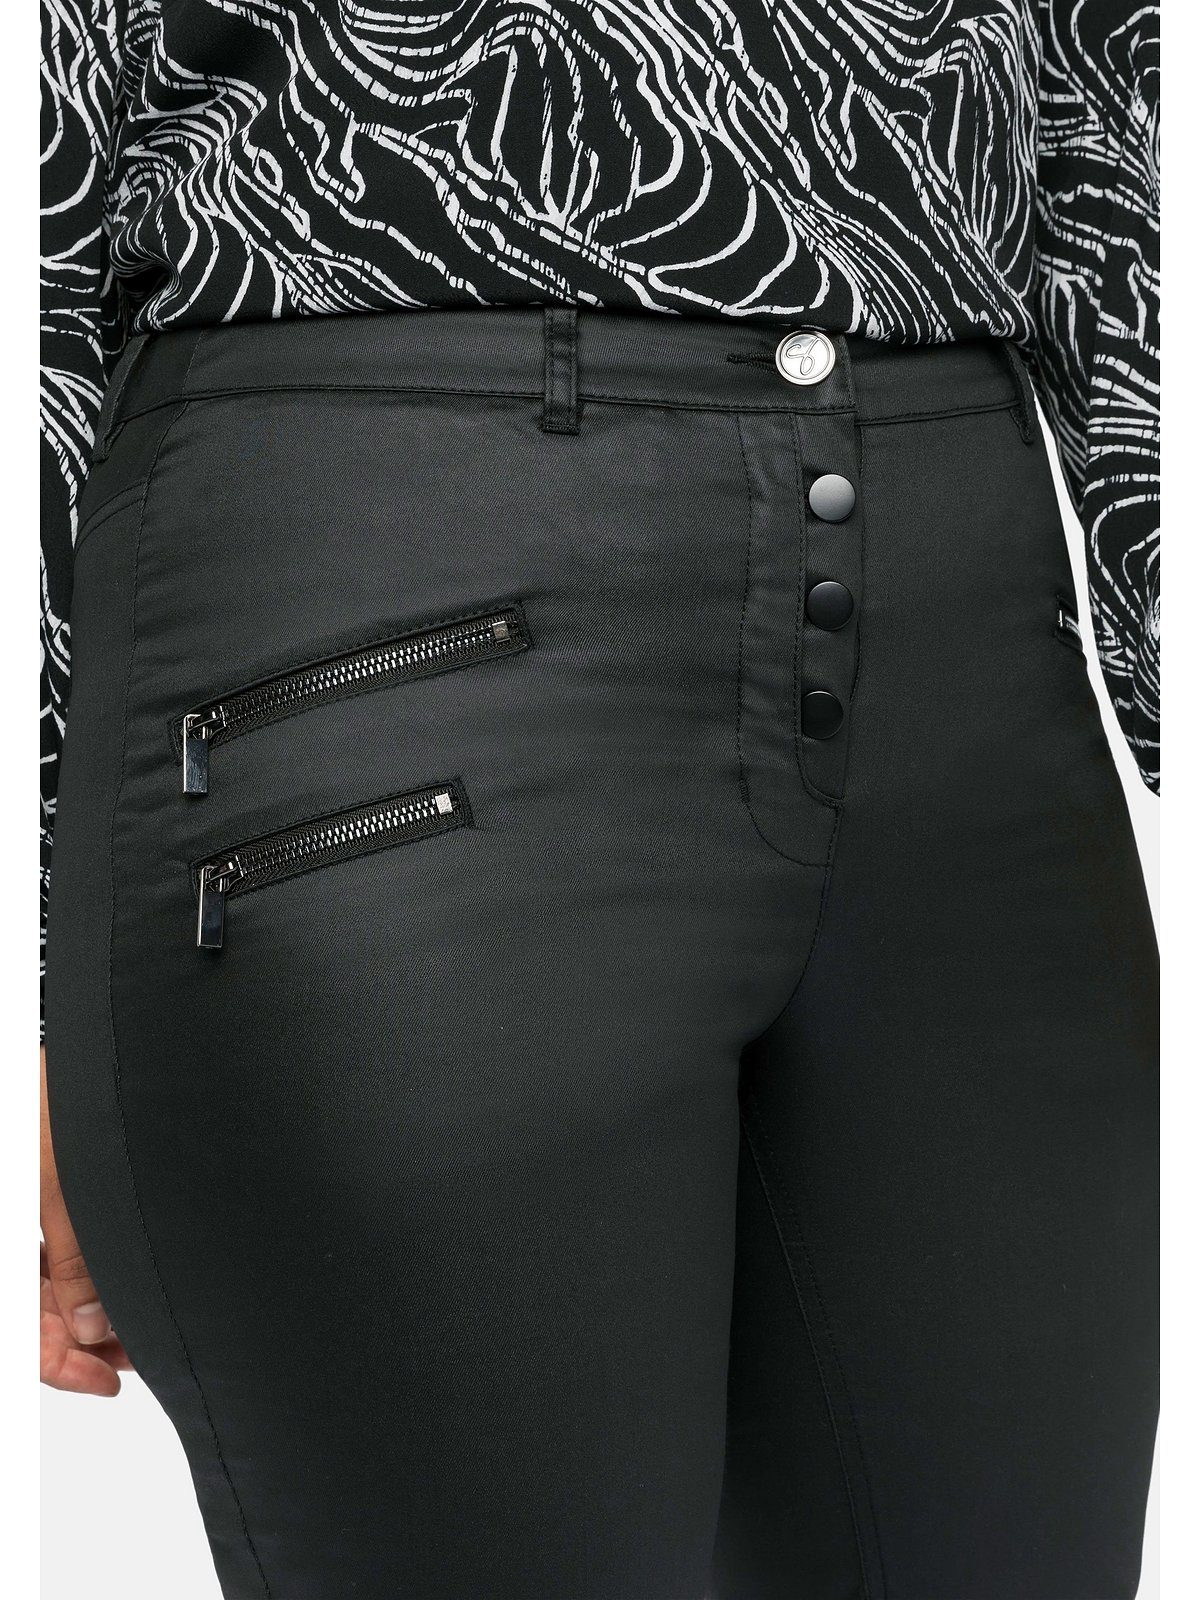 Damen Hosen Sheego Stretch-Hose Hose mit Zippern